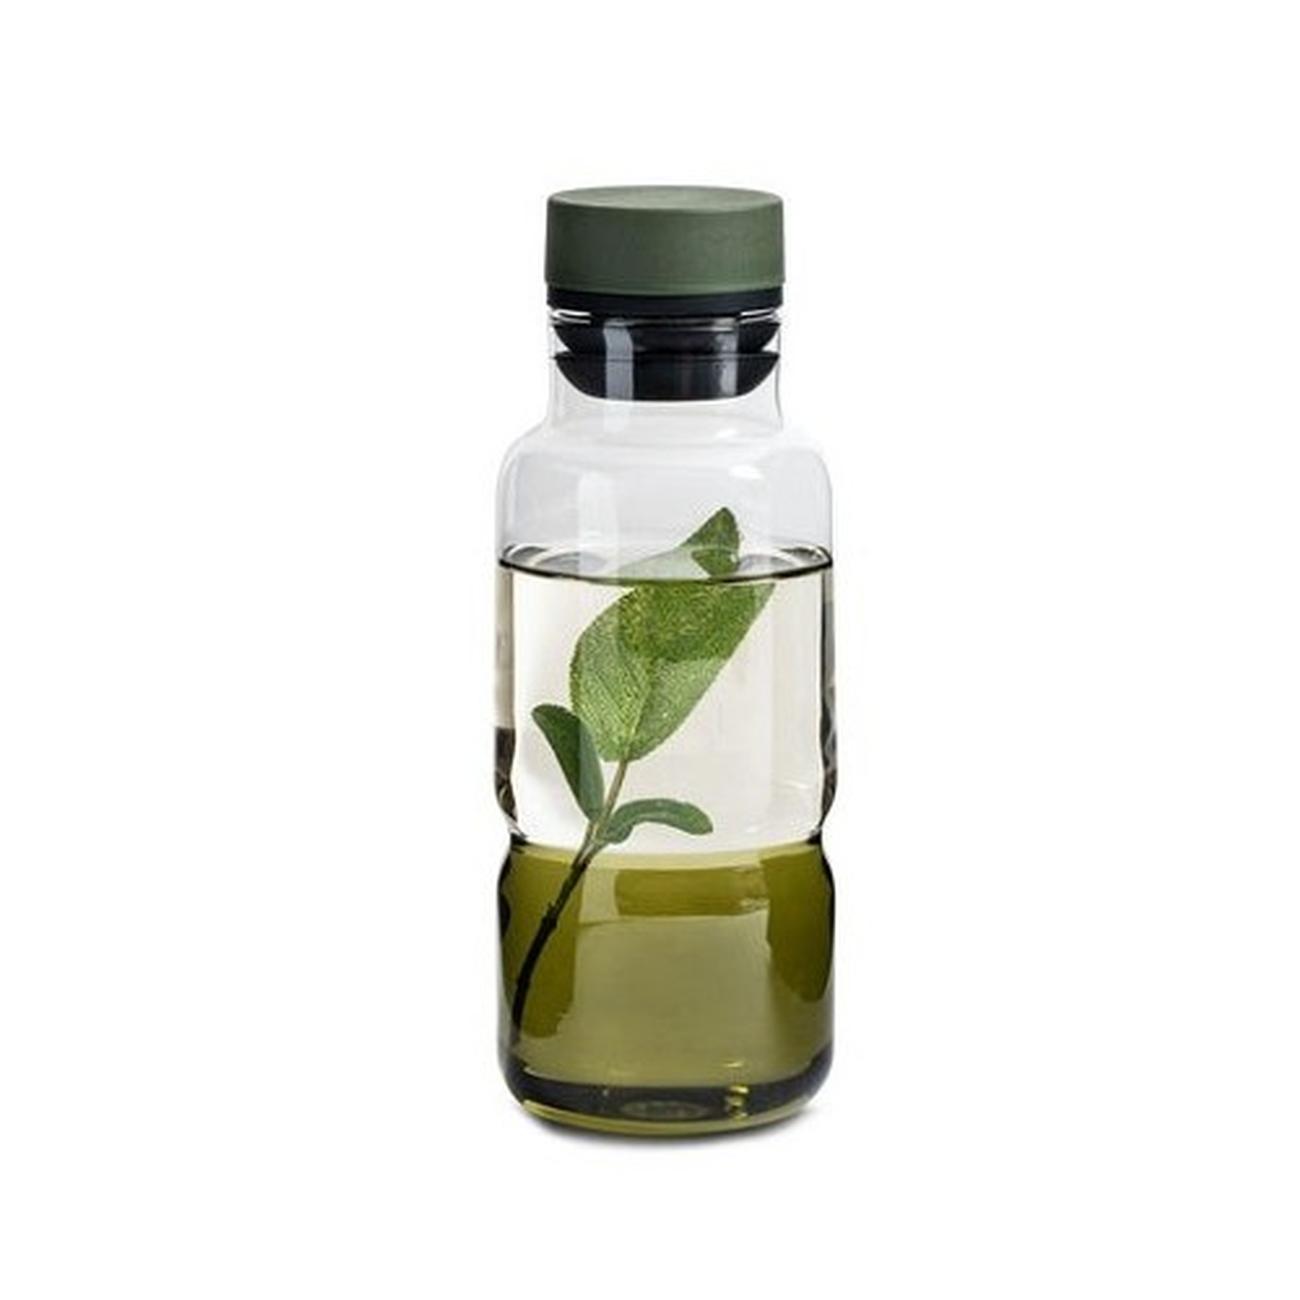 crg-billund-oil-vinegar-parsley  - Crushgrind Billund Oil & Vinegar, Parsley